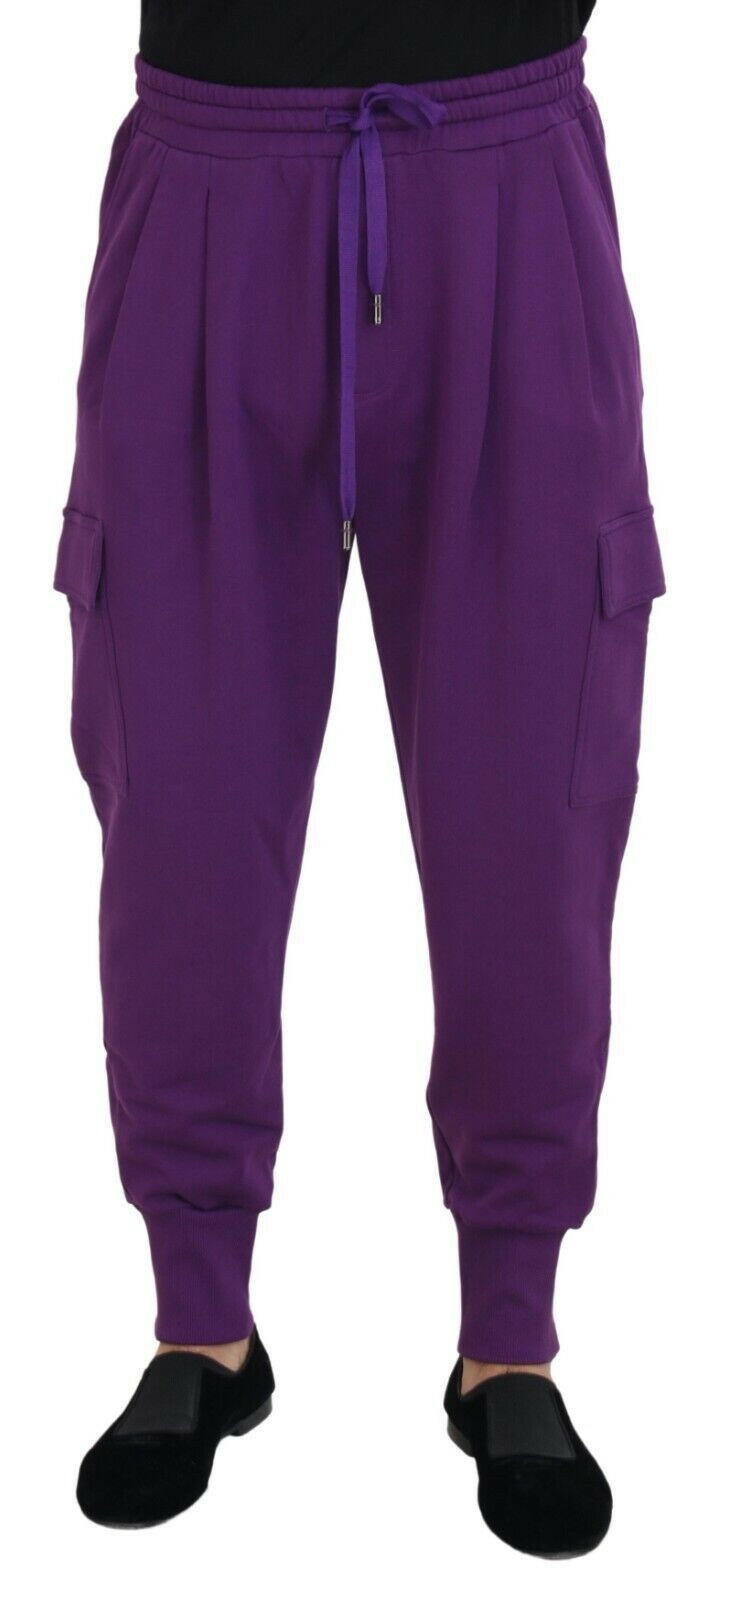 Dolce & Gabbana Purple Cotton Cargo Sweatpants Jogging Pants - GENUINE AUTHENTIC BRAND LLC  